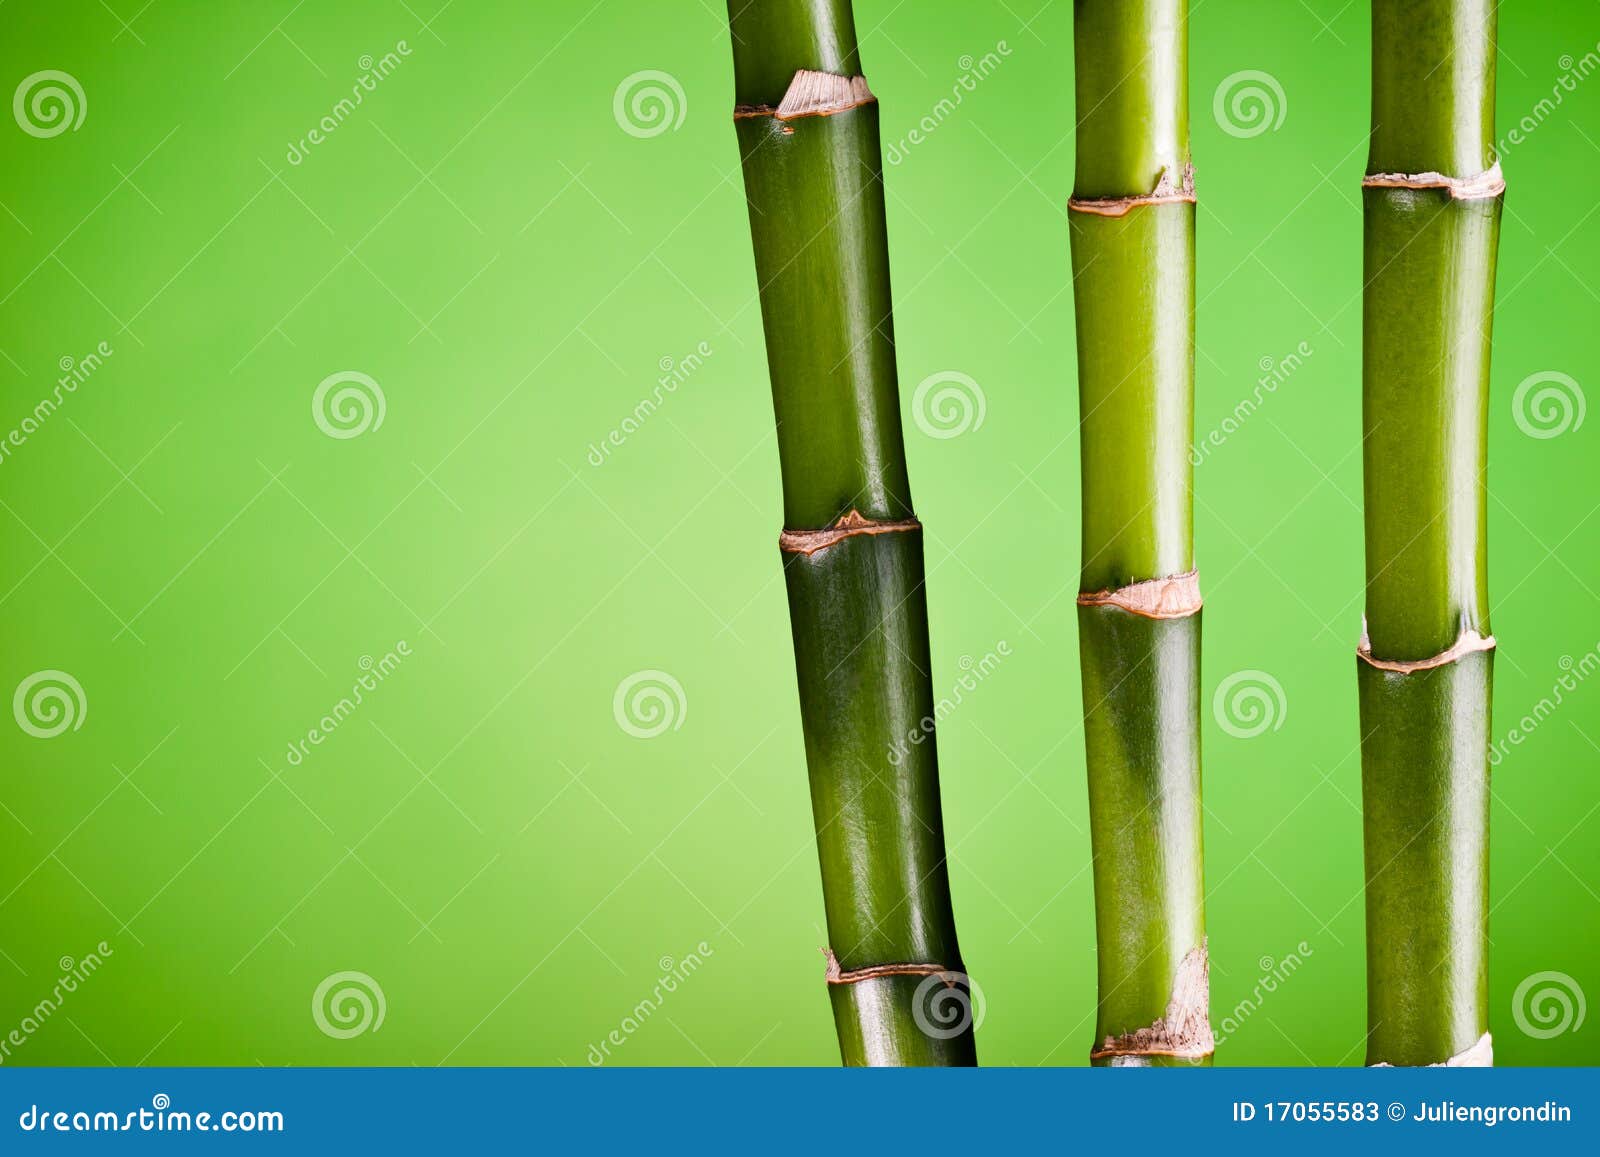 three bamboo stems on green